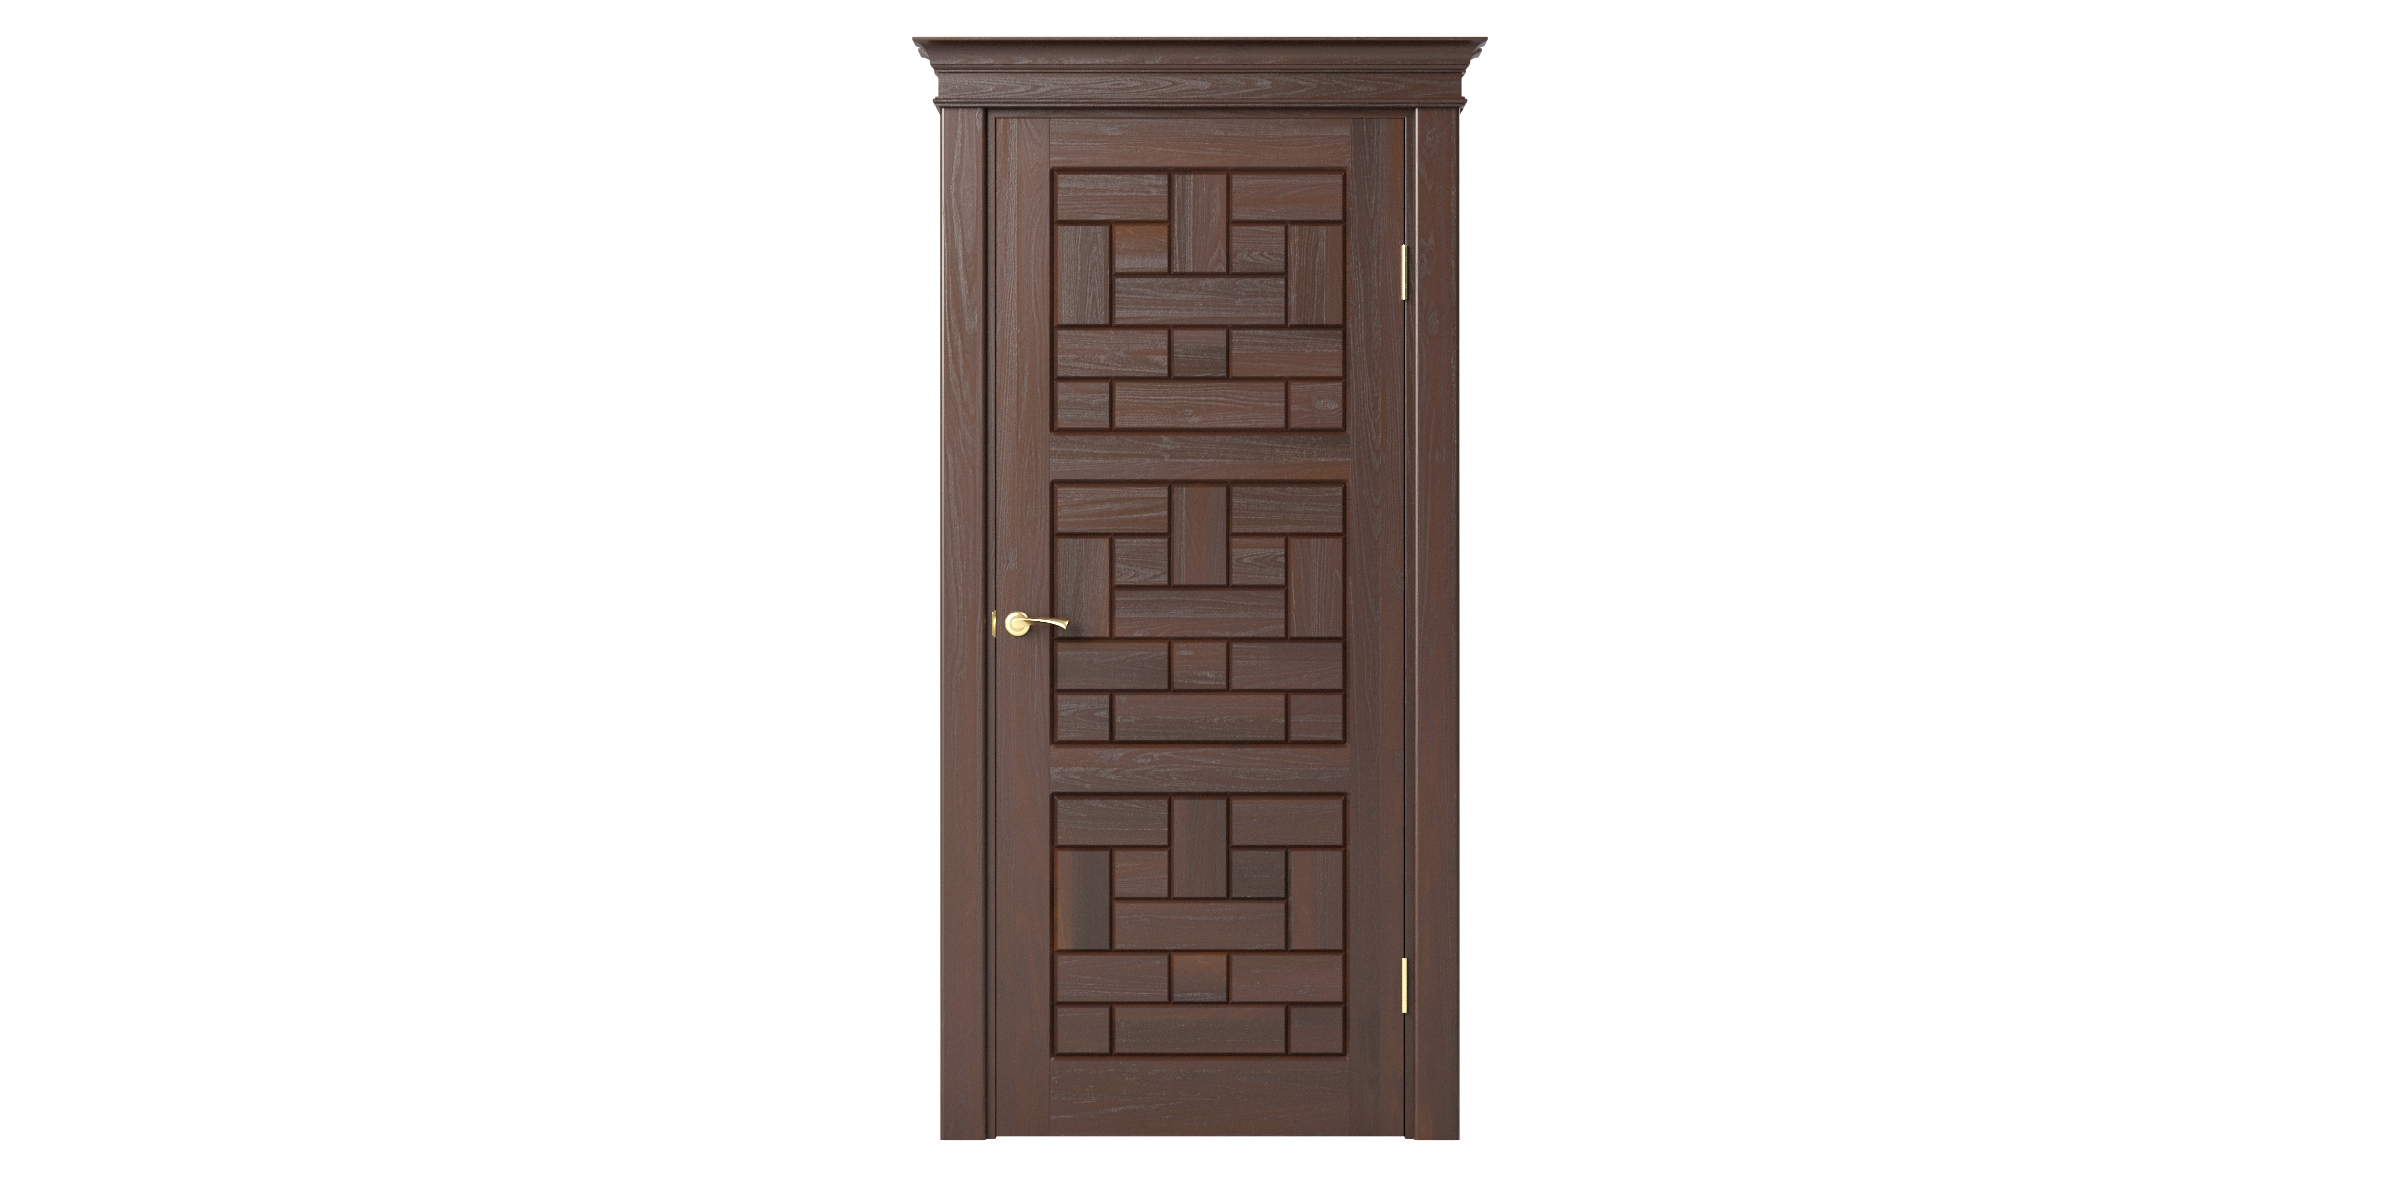 classic door design